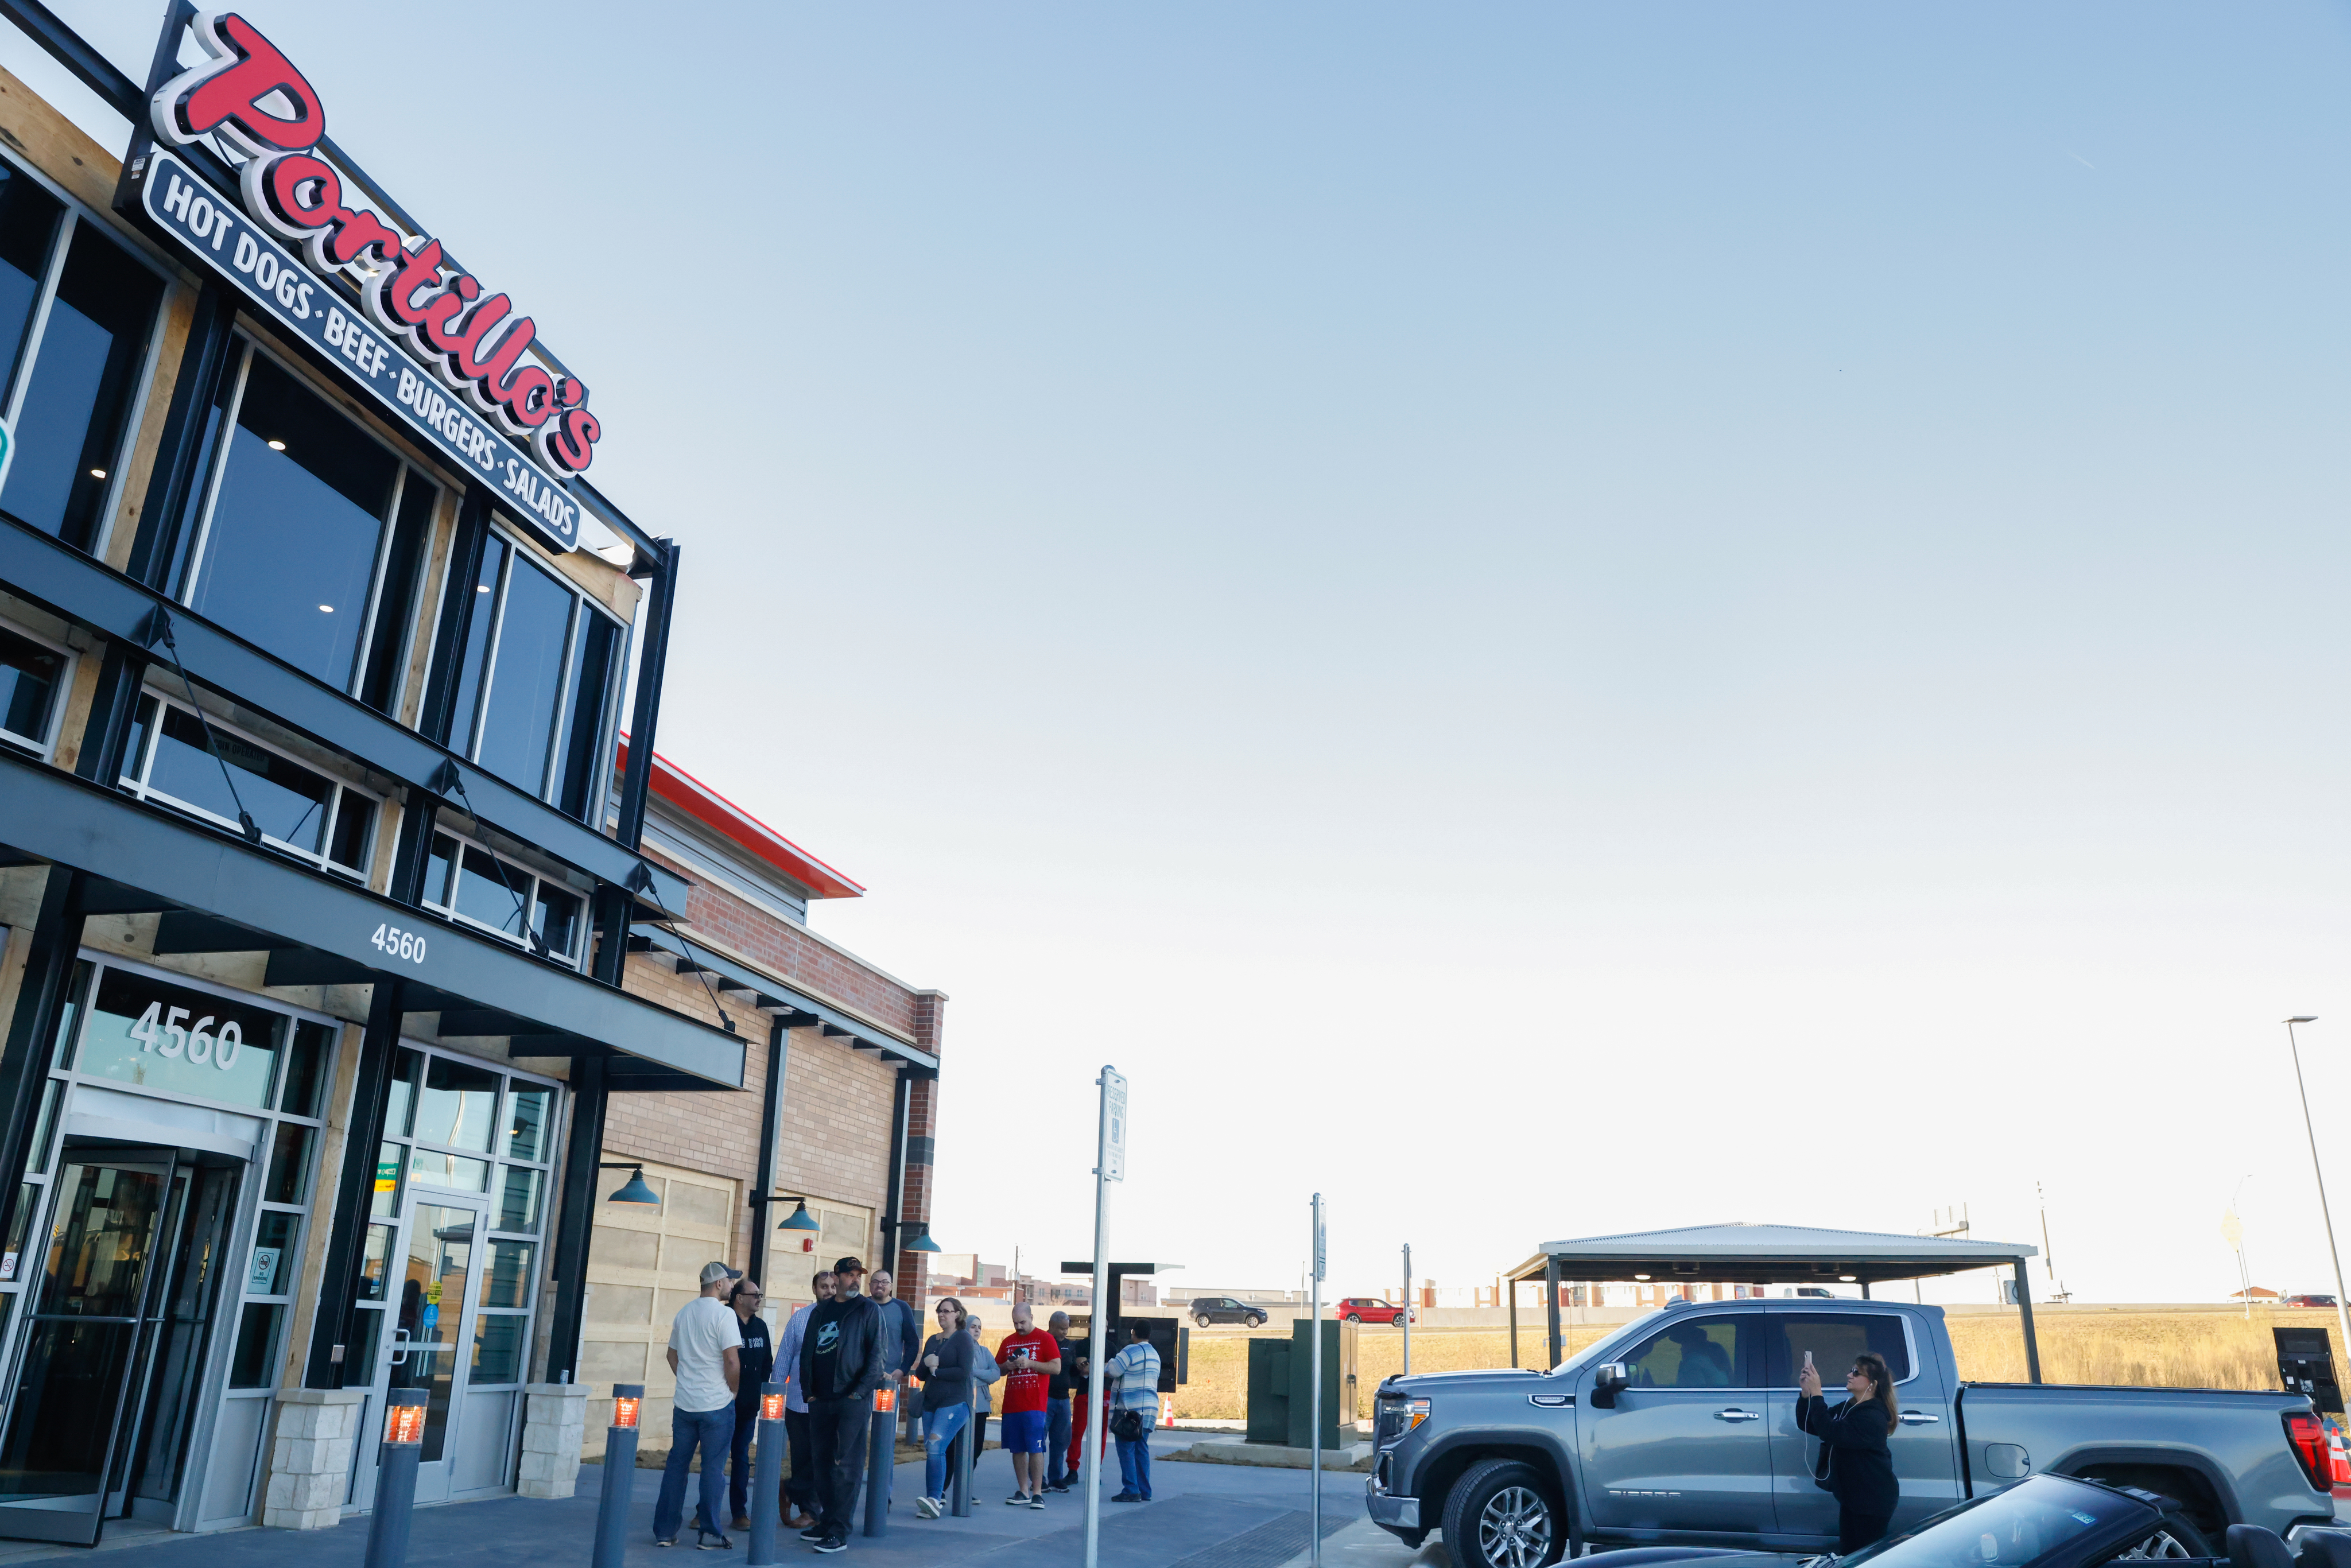 Portillo's is opening in Arlington, TX